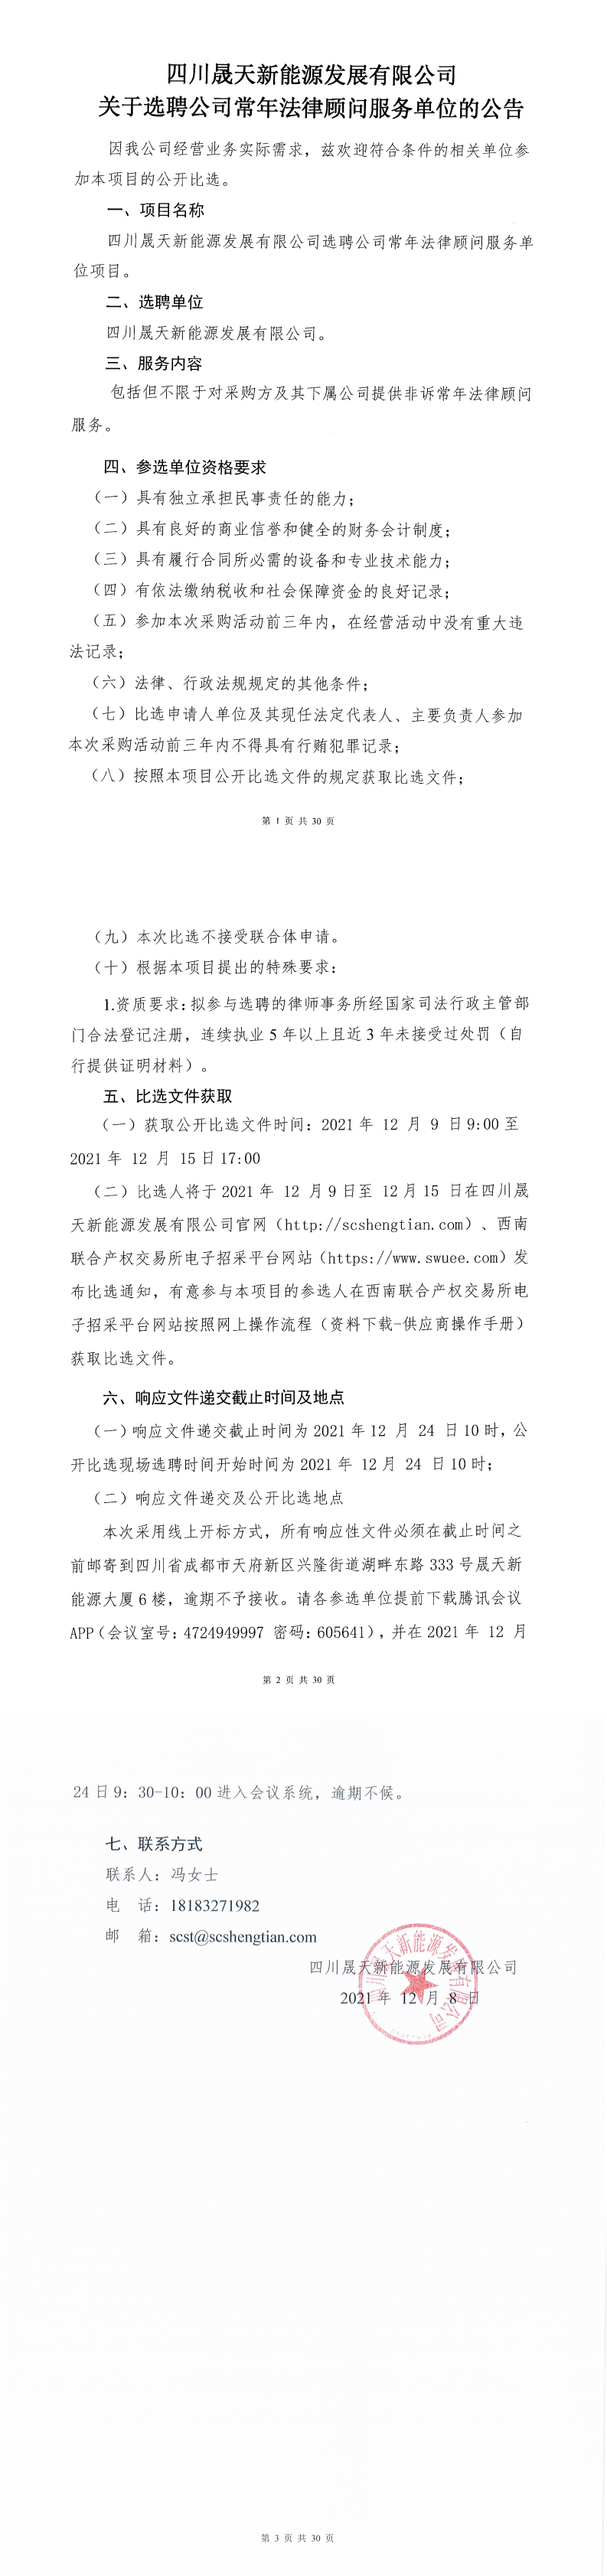 leyu乐鱼体育APP官方网站关于选聘公司常年法律顾问服务单位的选聘公开比选公告_00.png